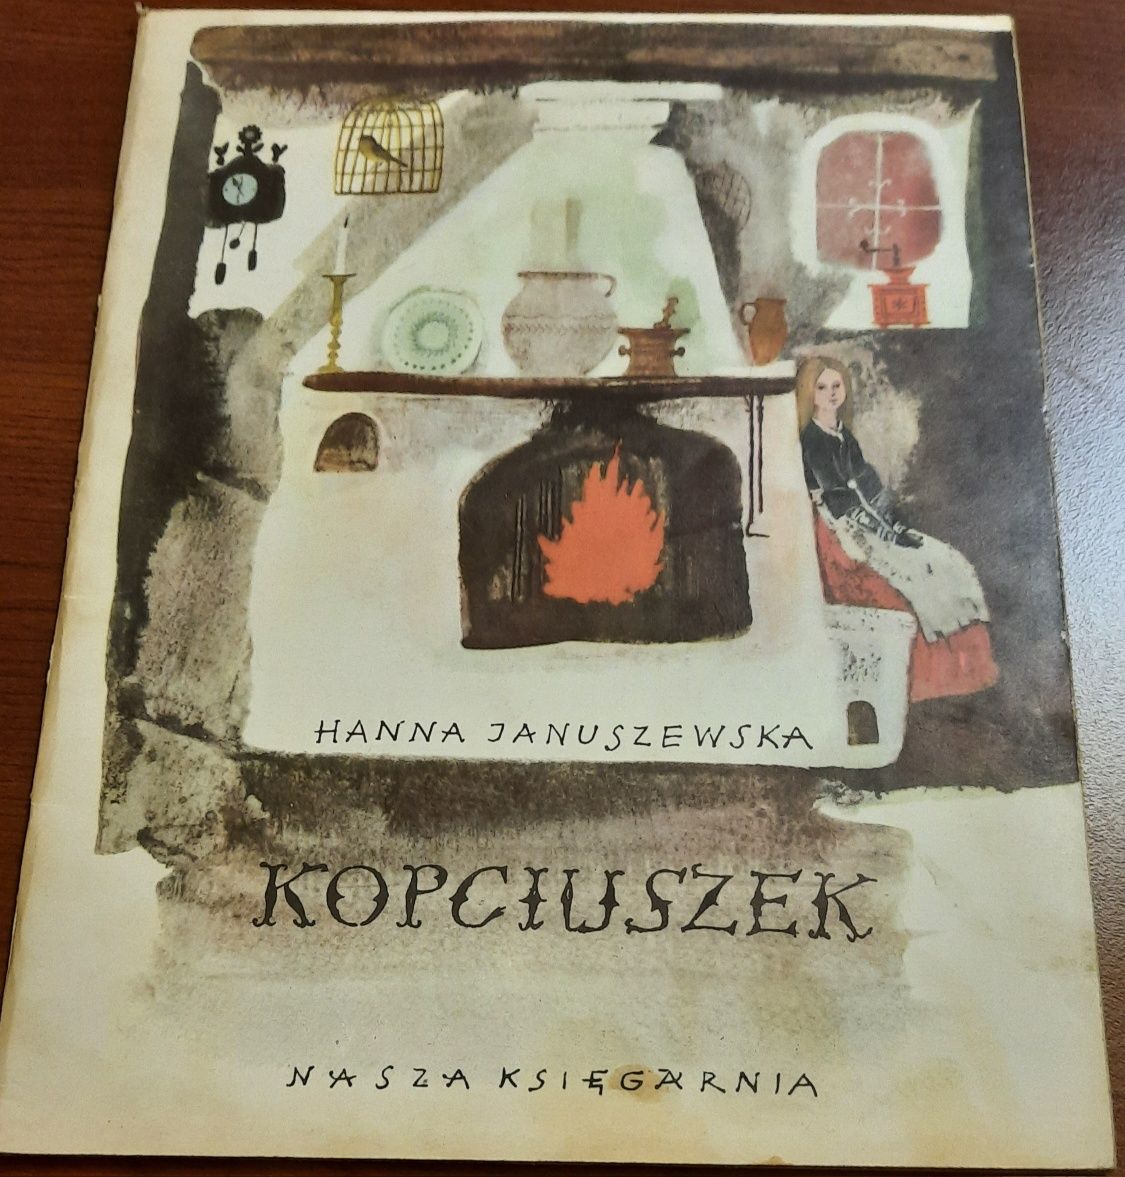 Hanna Januszewska "Kopciuszek"